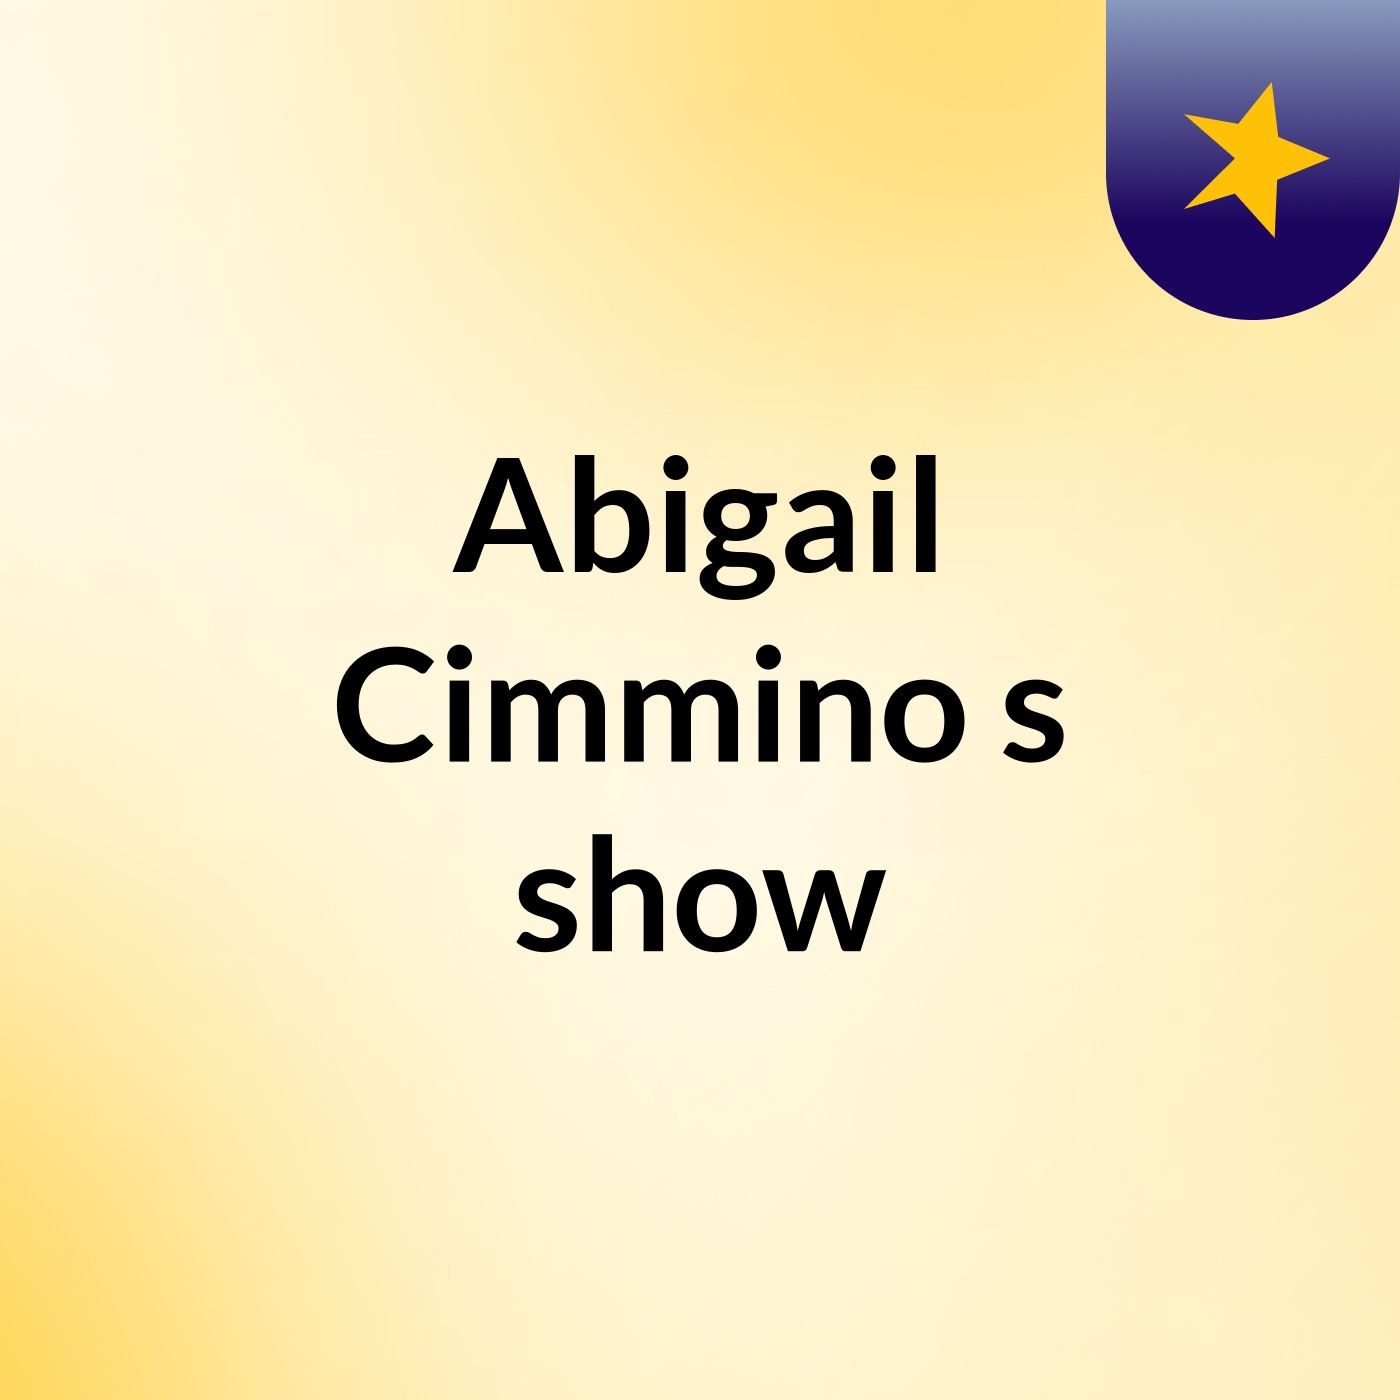 Abigail Cimmino's show